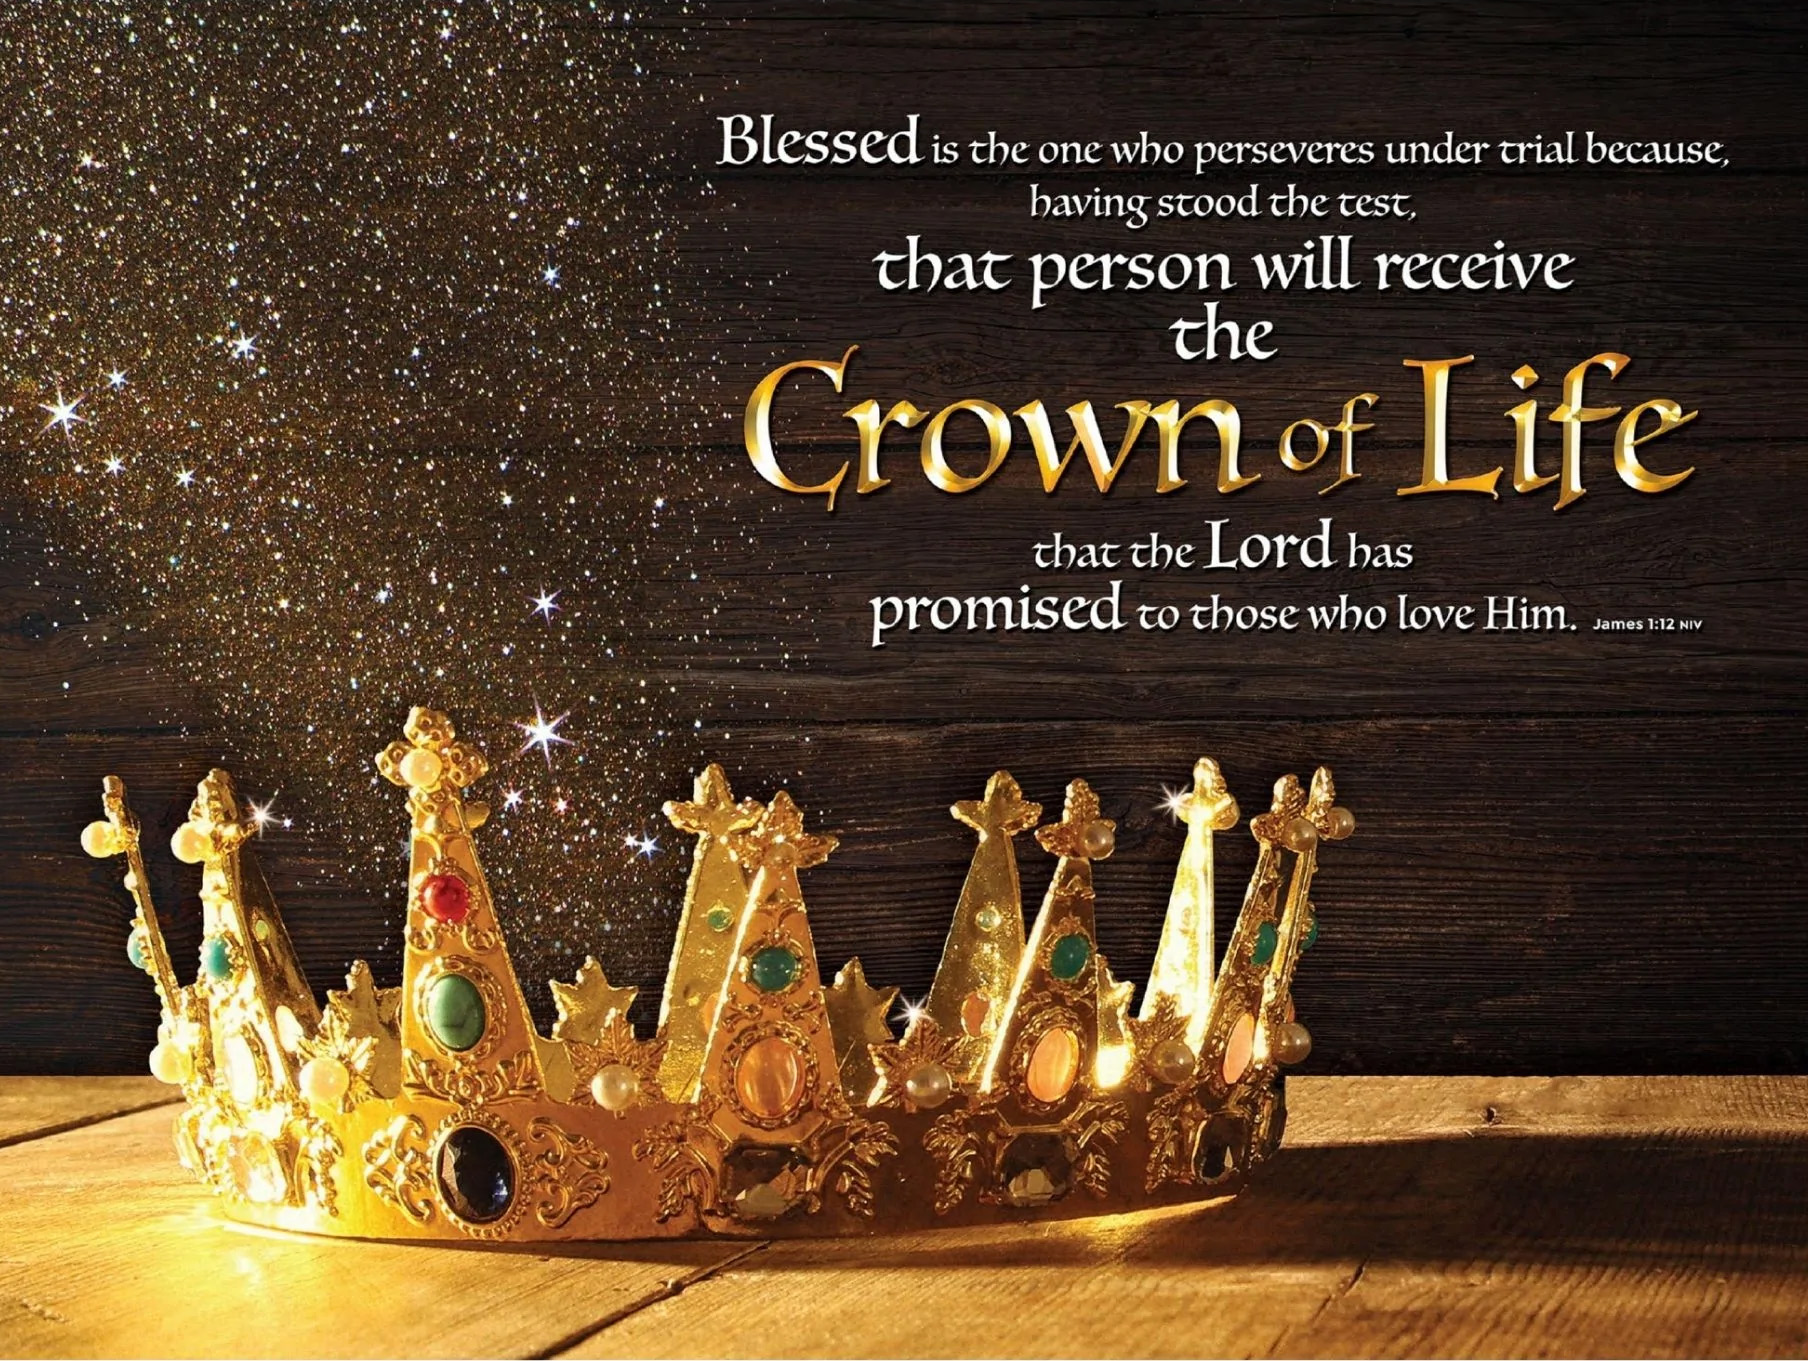 God's Crown of Life